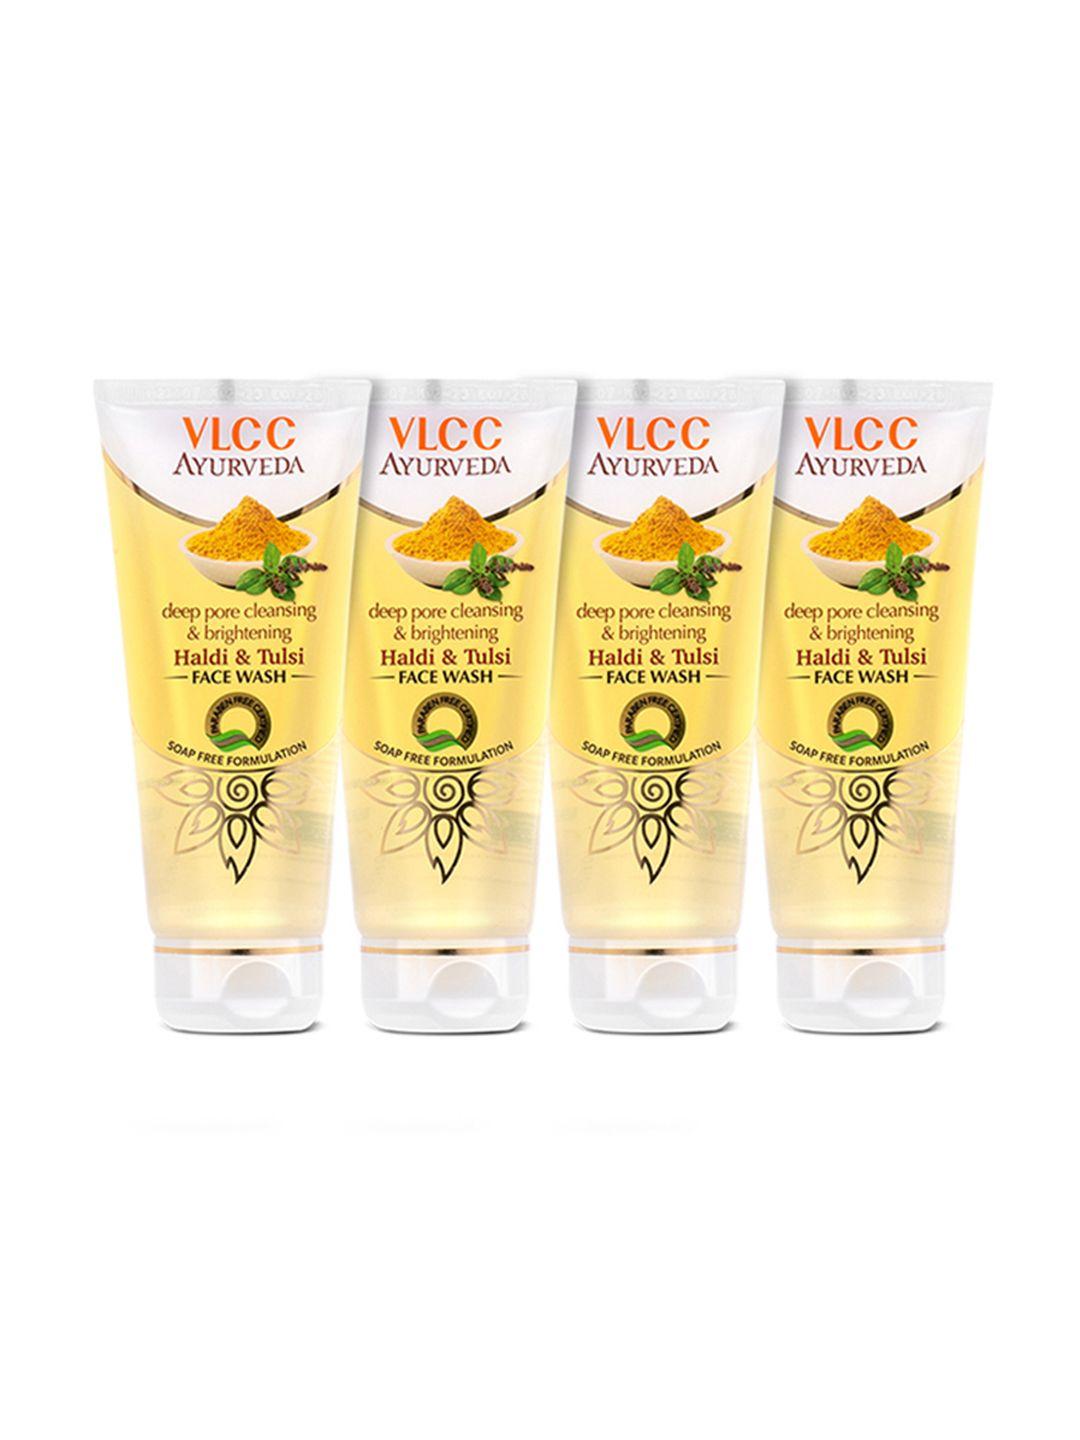 vlcc set of 4 deep pore cleansing & brightening haldi & tulsi face wash - 100 ml each